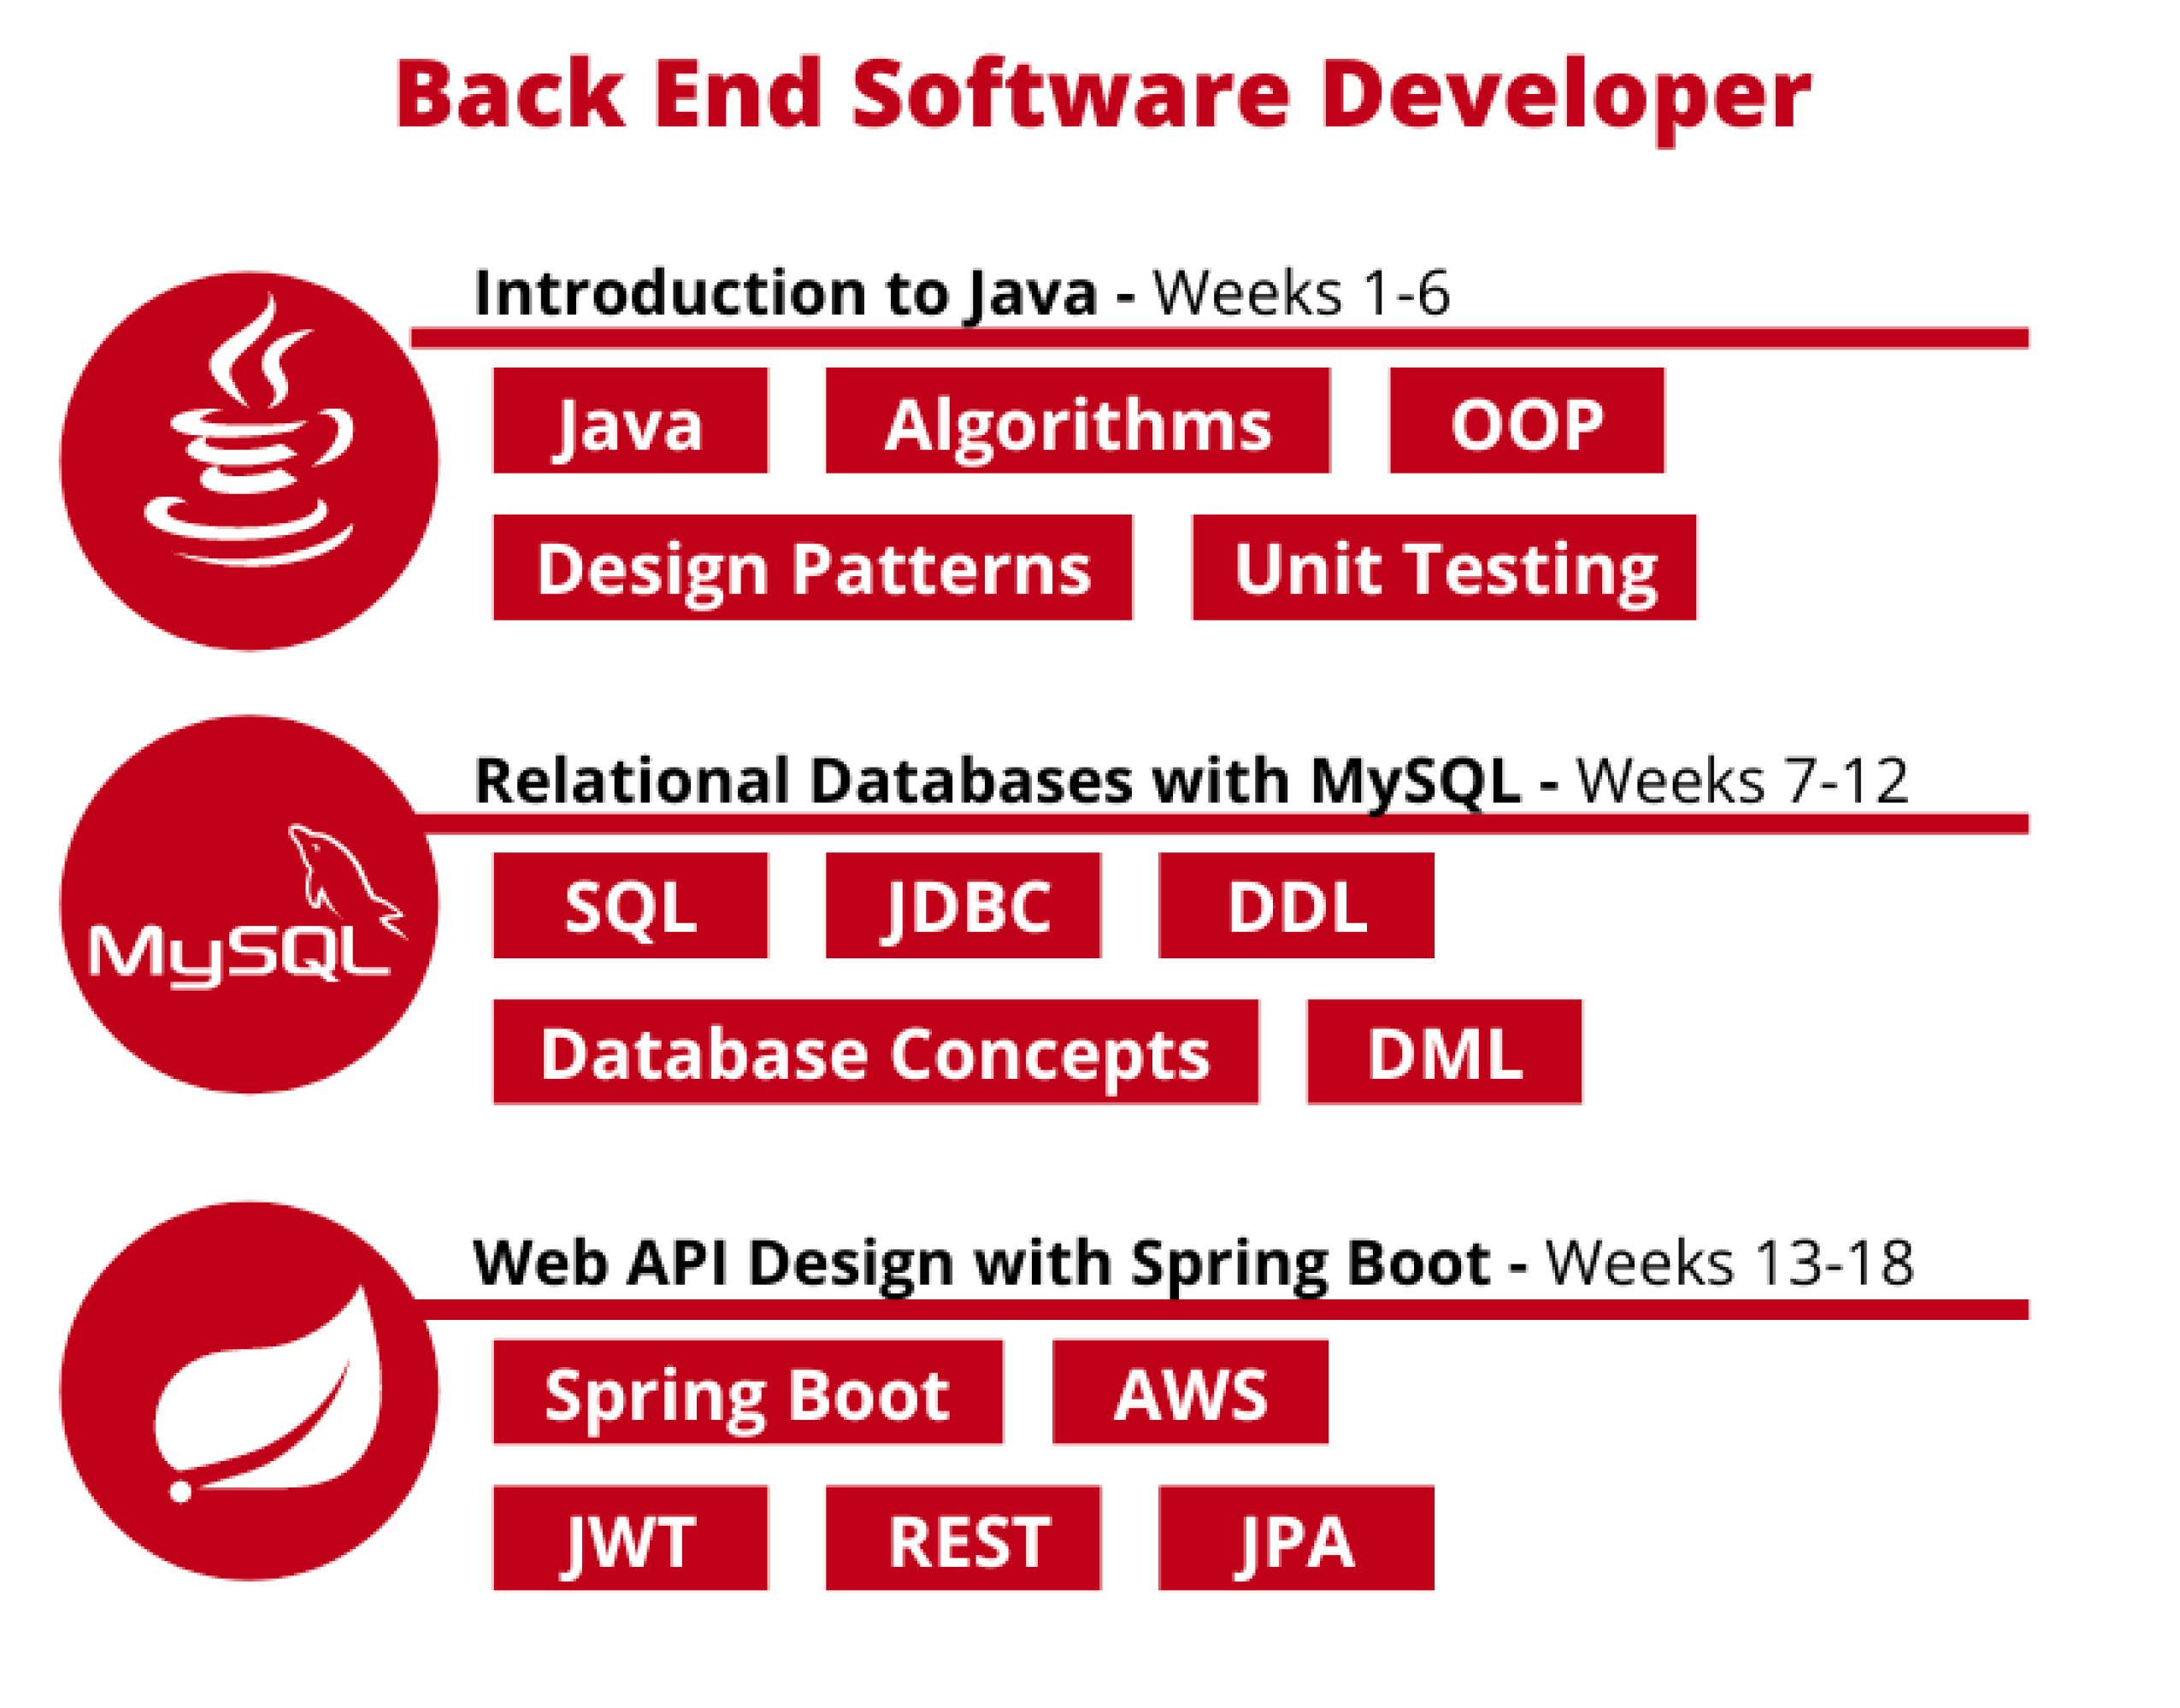 Back end software developer course timeline: Introduction to Java (weeks 1-6), Relational databases with MySQL (weeks 7-12), Web API design with Spring Boot (weeks 13-18)